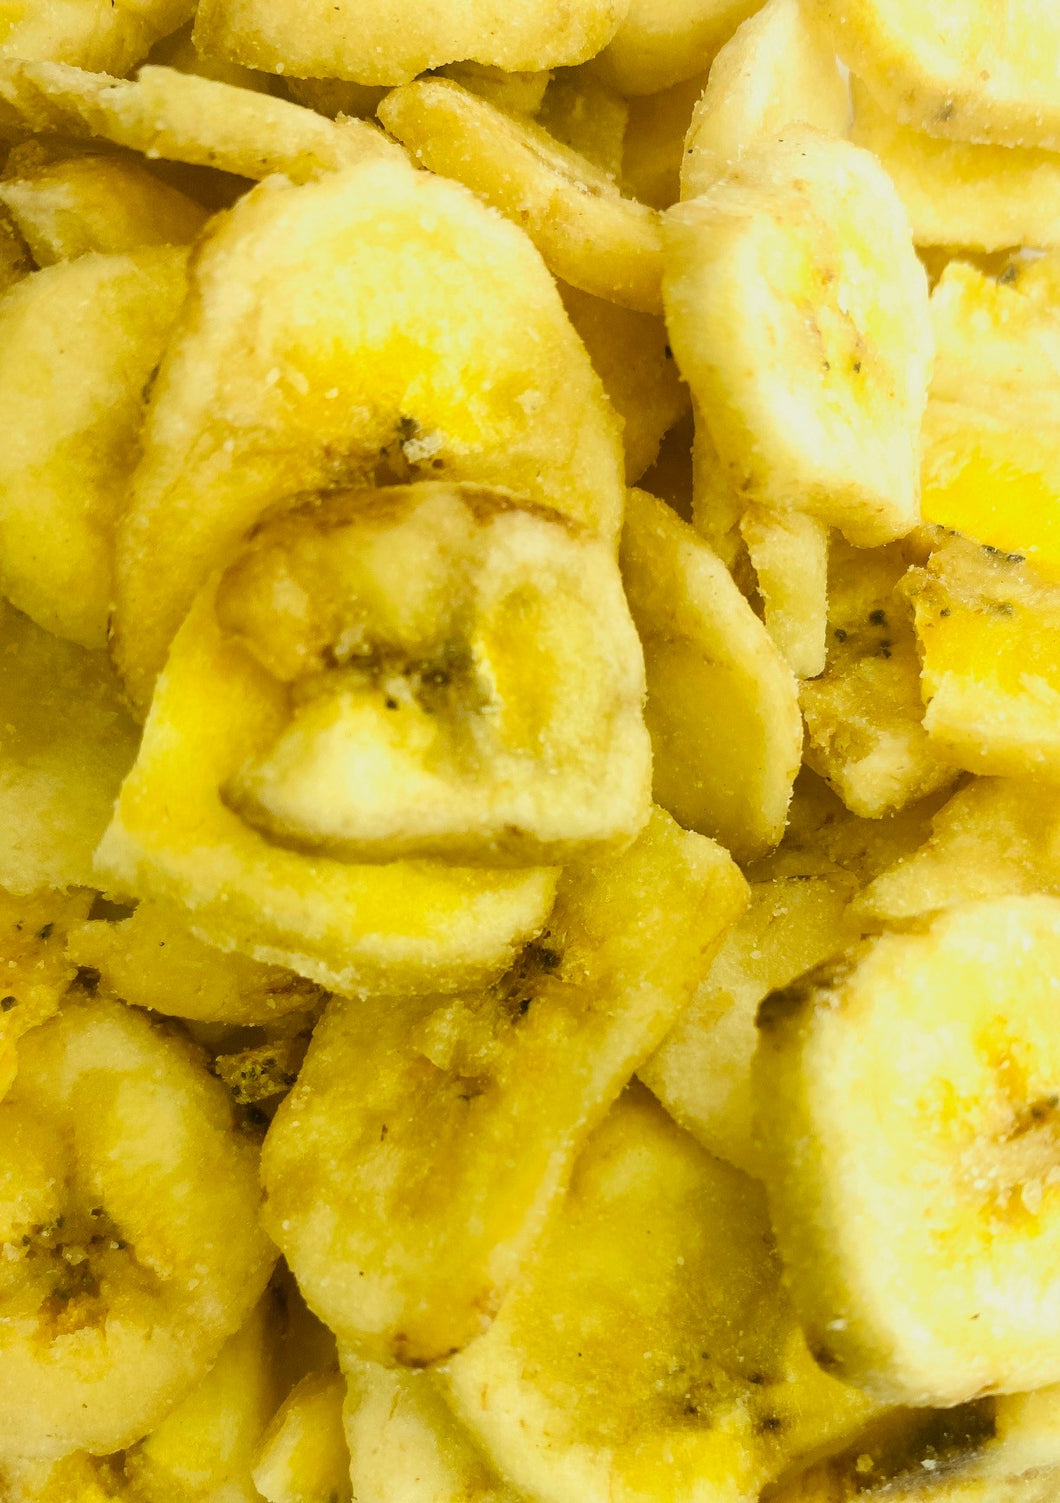 Banana, Slices - Dried Fruit